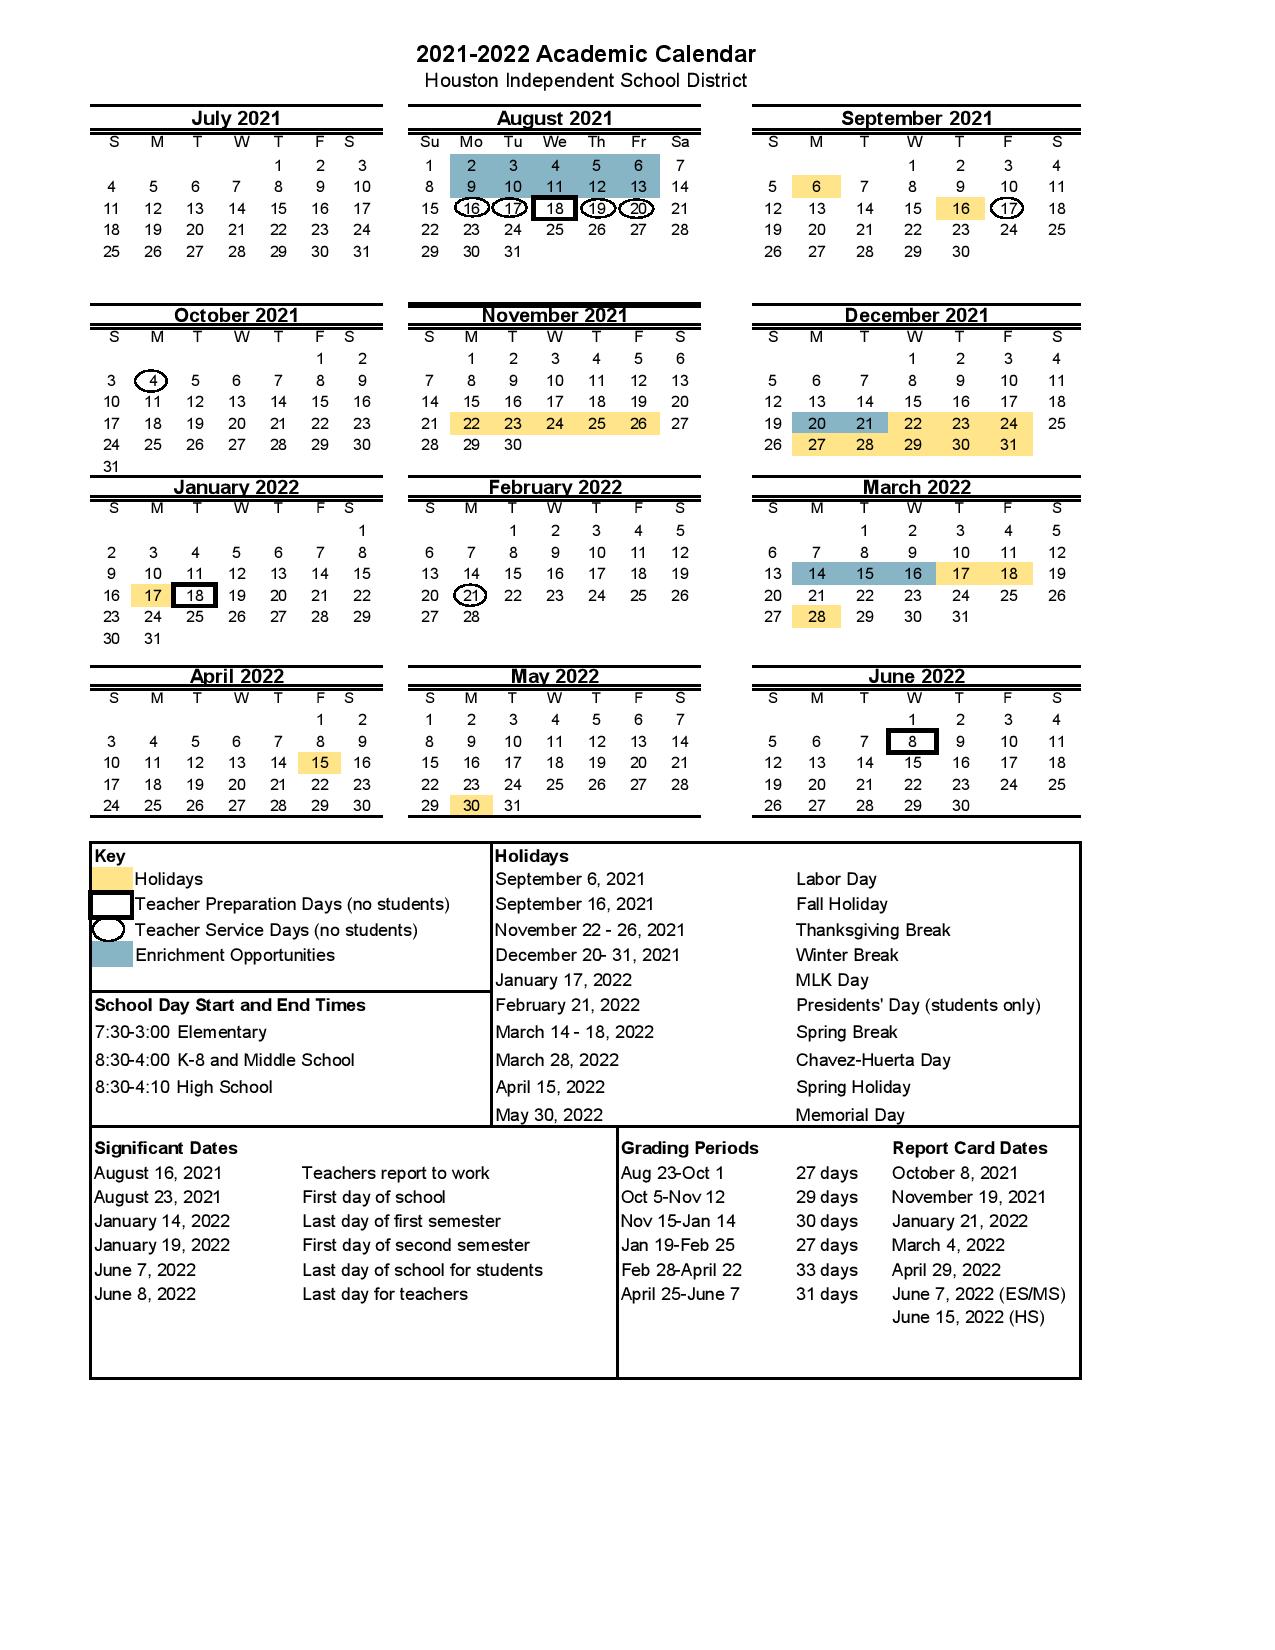 Hisd 2022 2023 Calendar Houston Independent School District Calendar 2021-2022